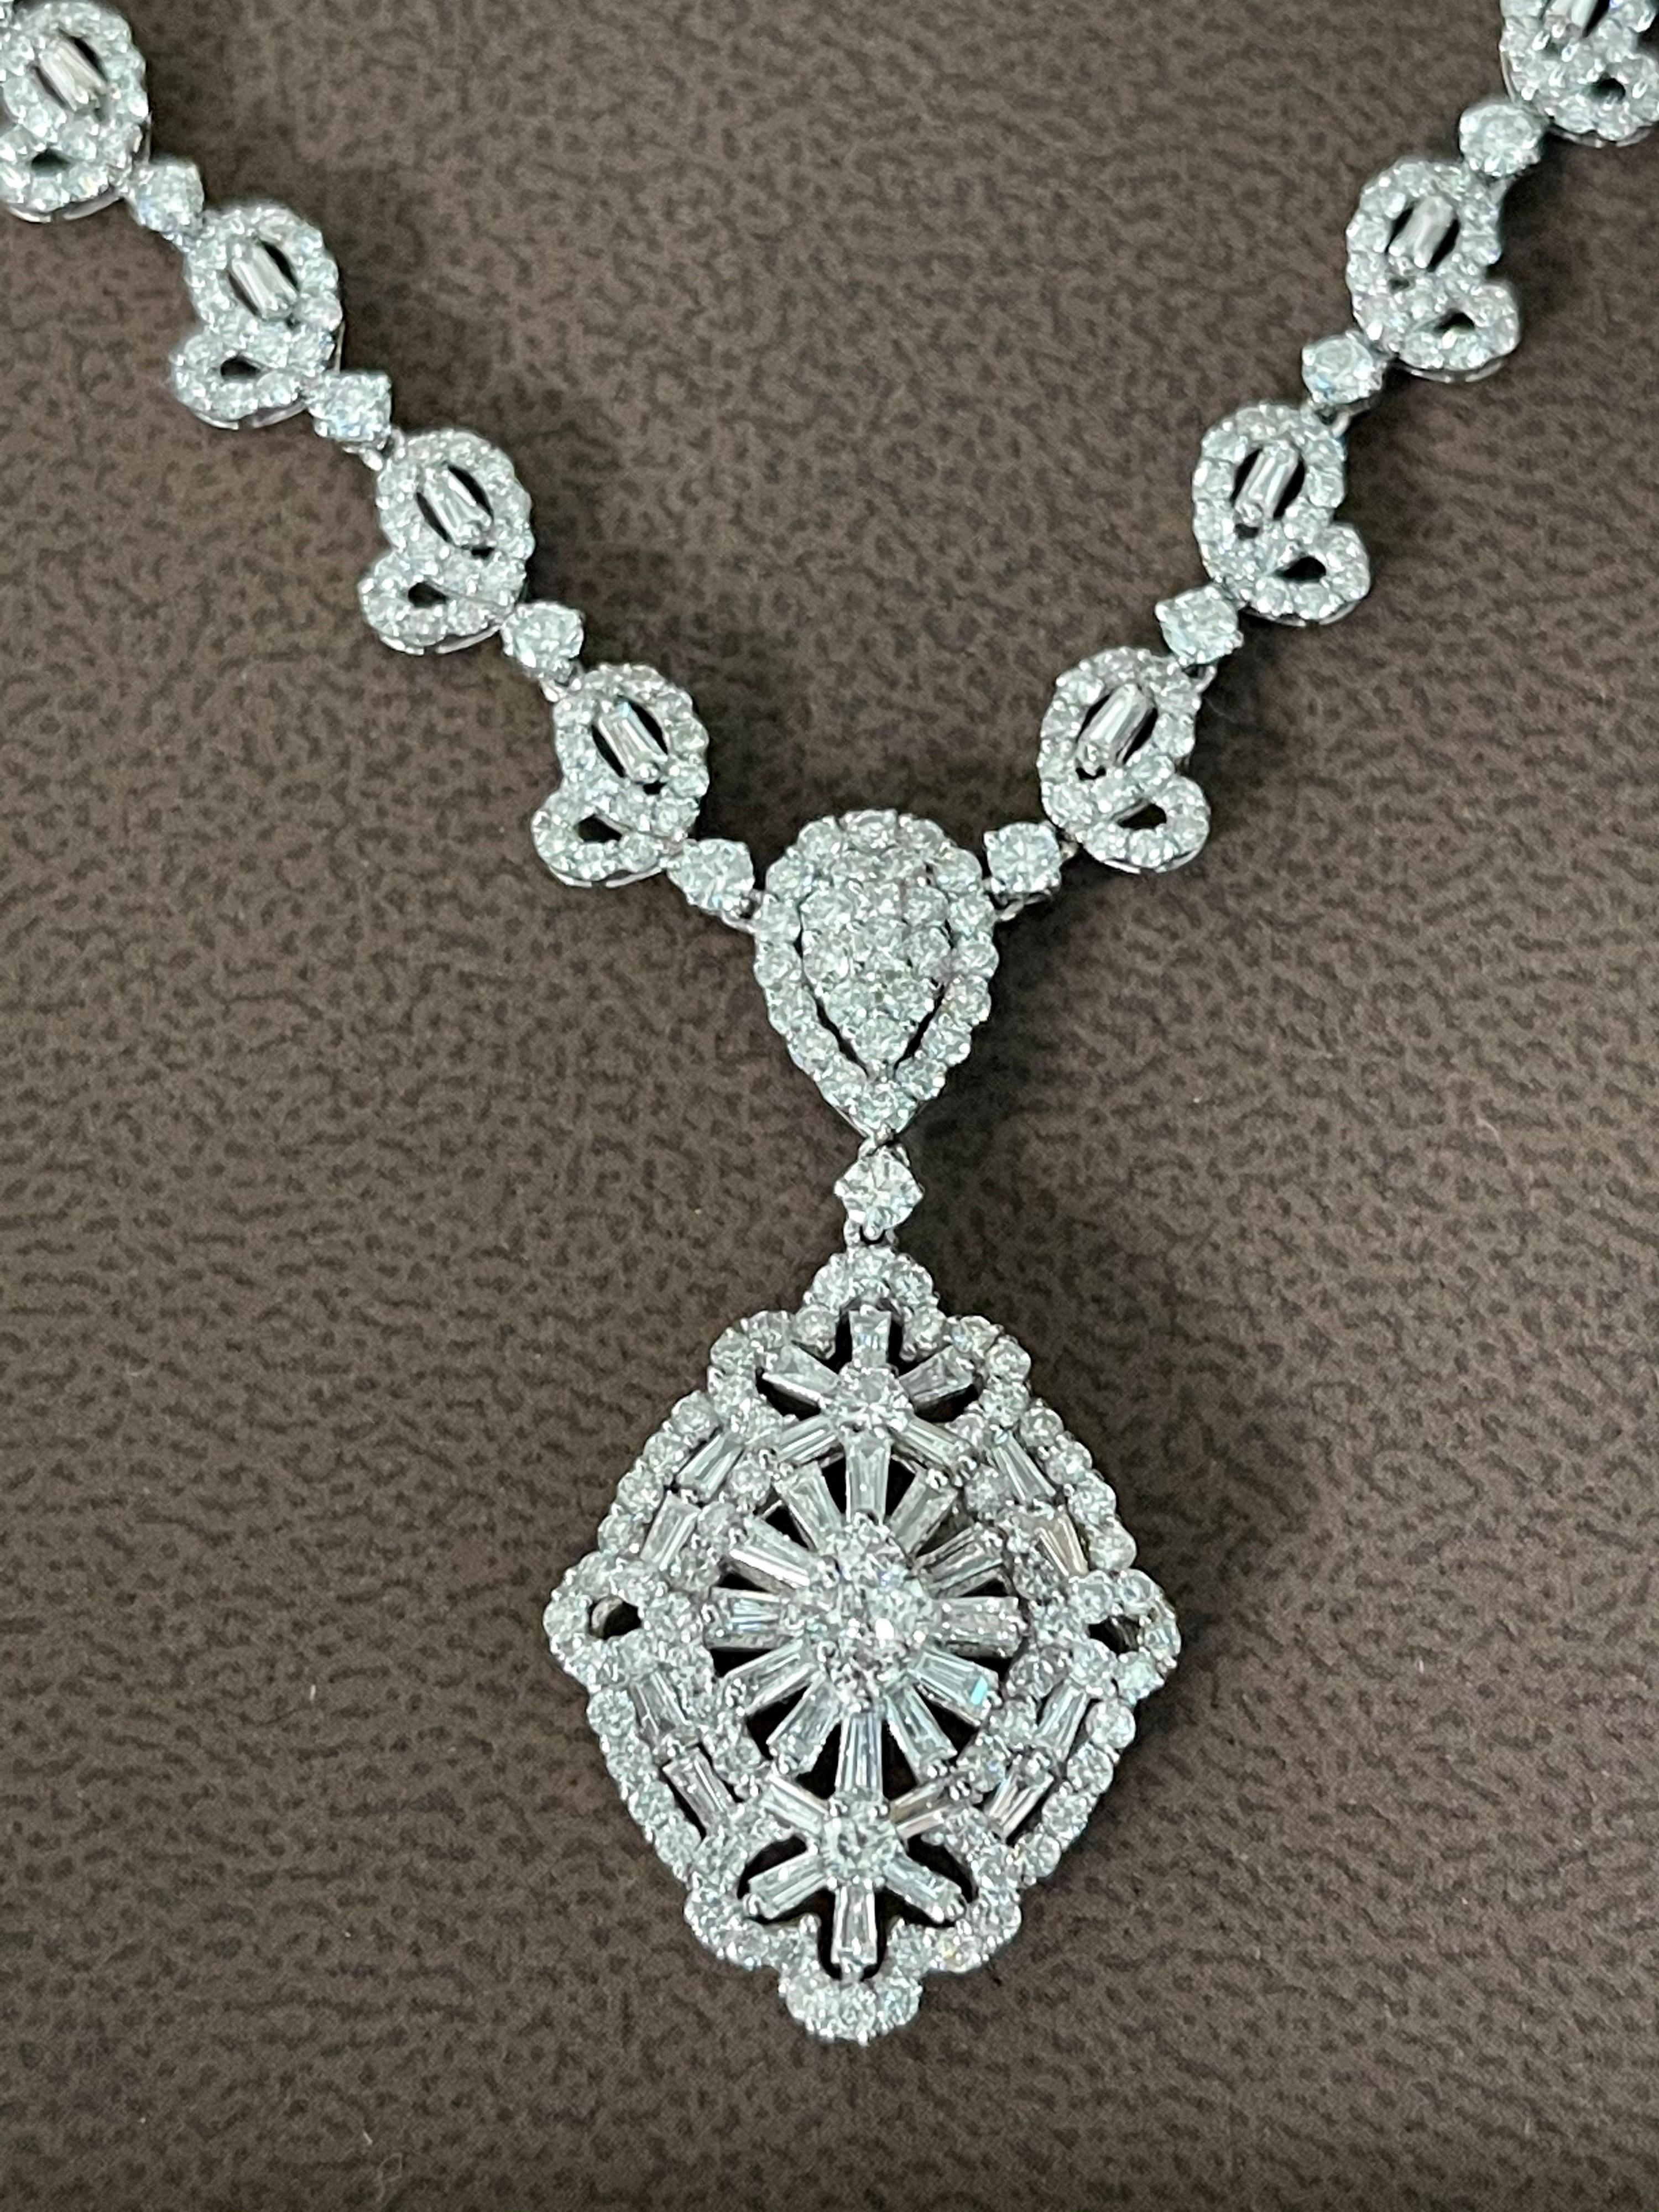 11.4 Carat Diamond Necklace in 18 Karat White Gold Bridal Brand New 7